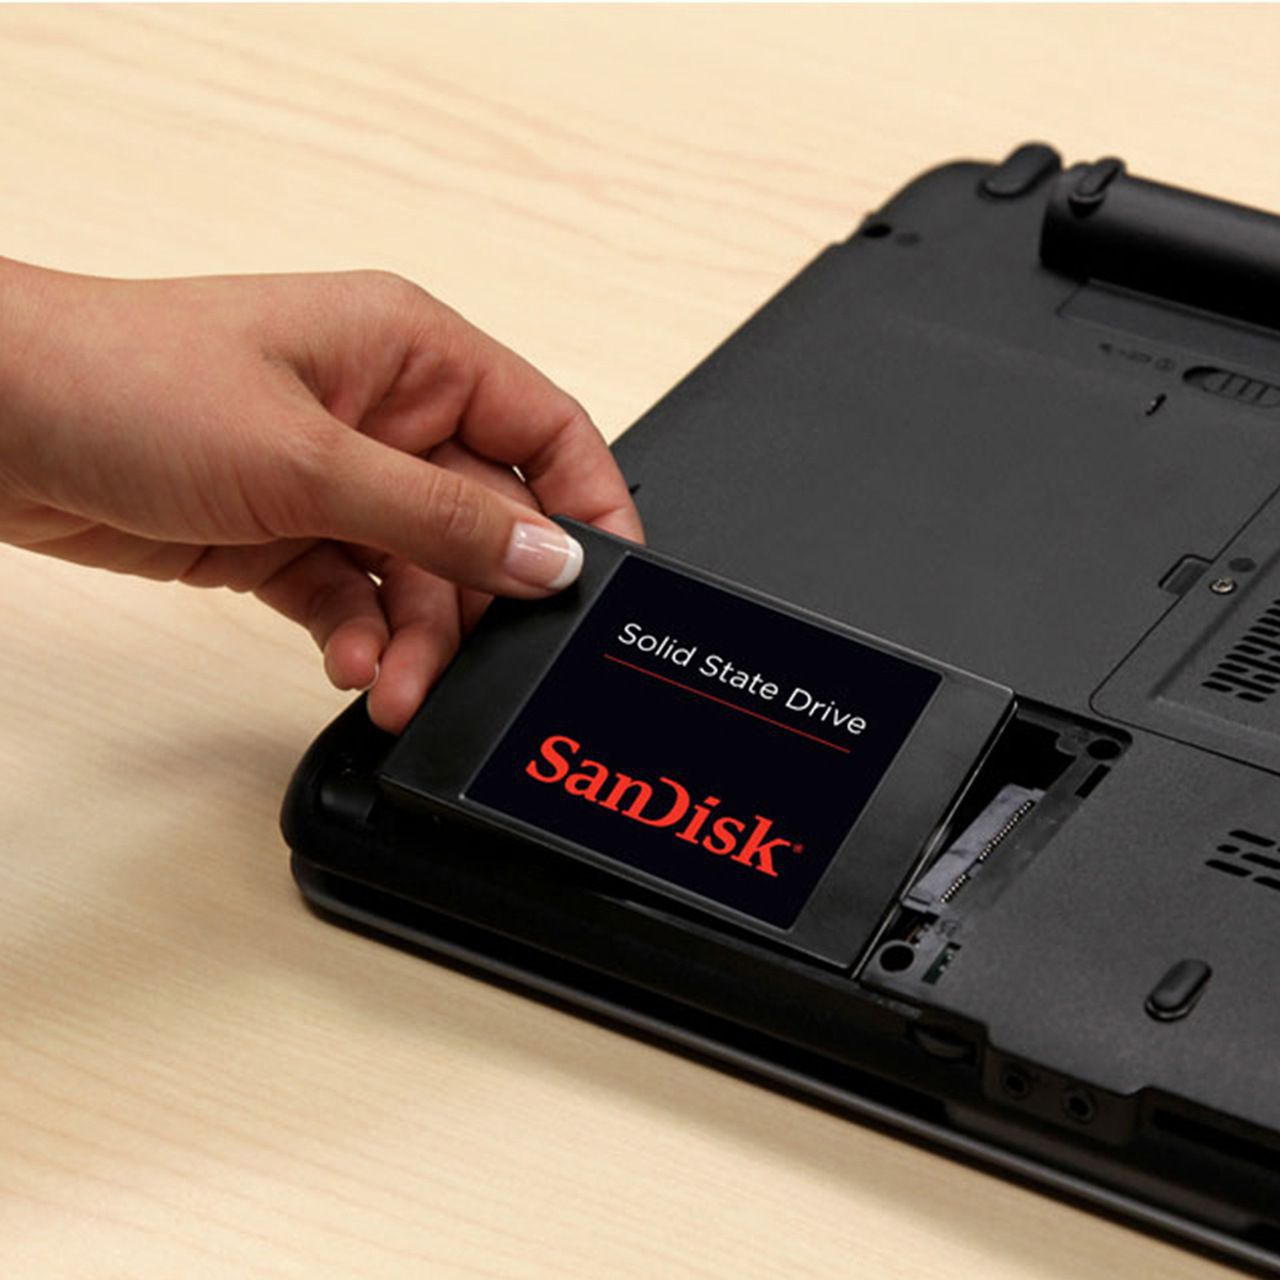 SSD 240GB Leitura 530MB Sandisk SDSSDA-240G-G26